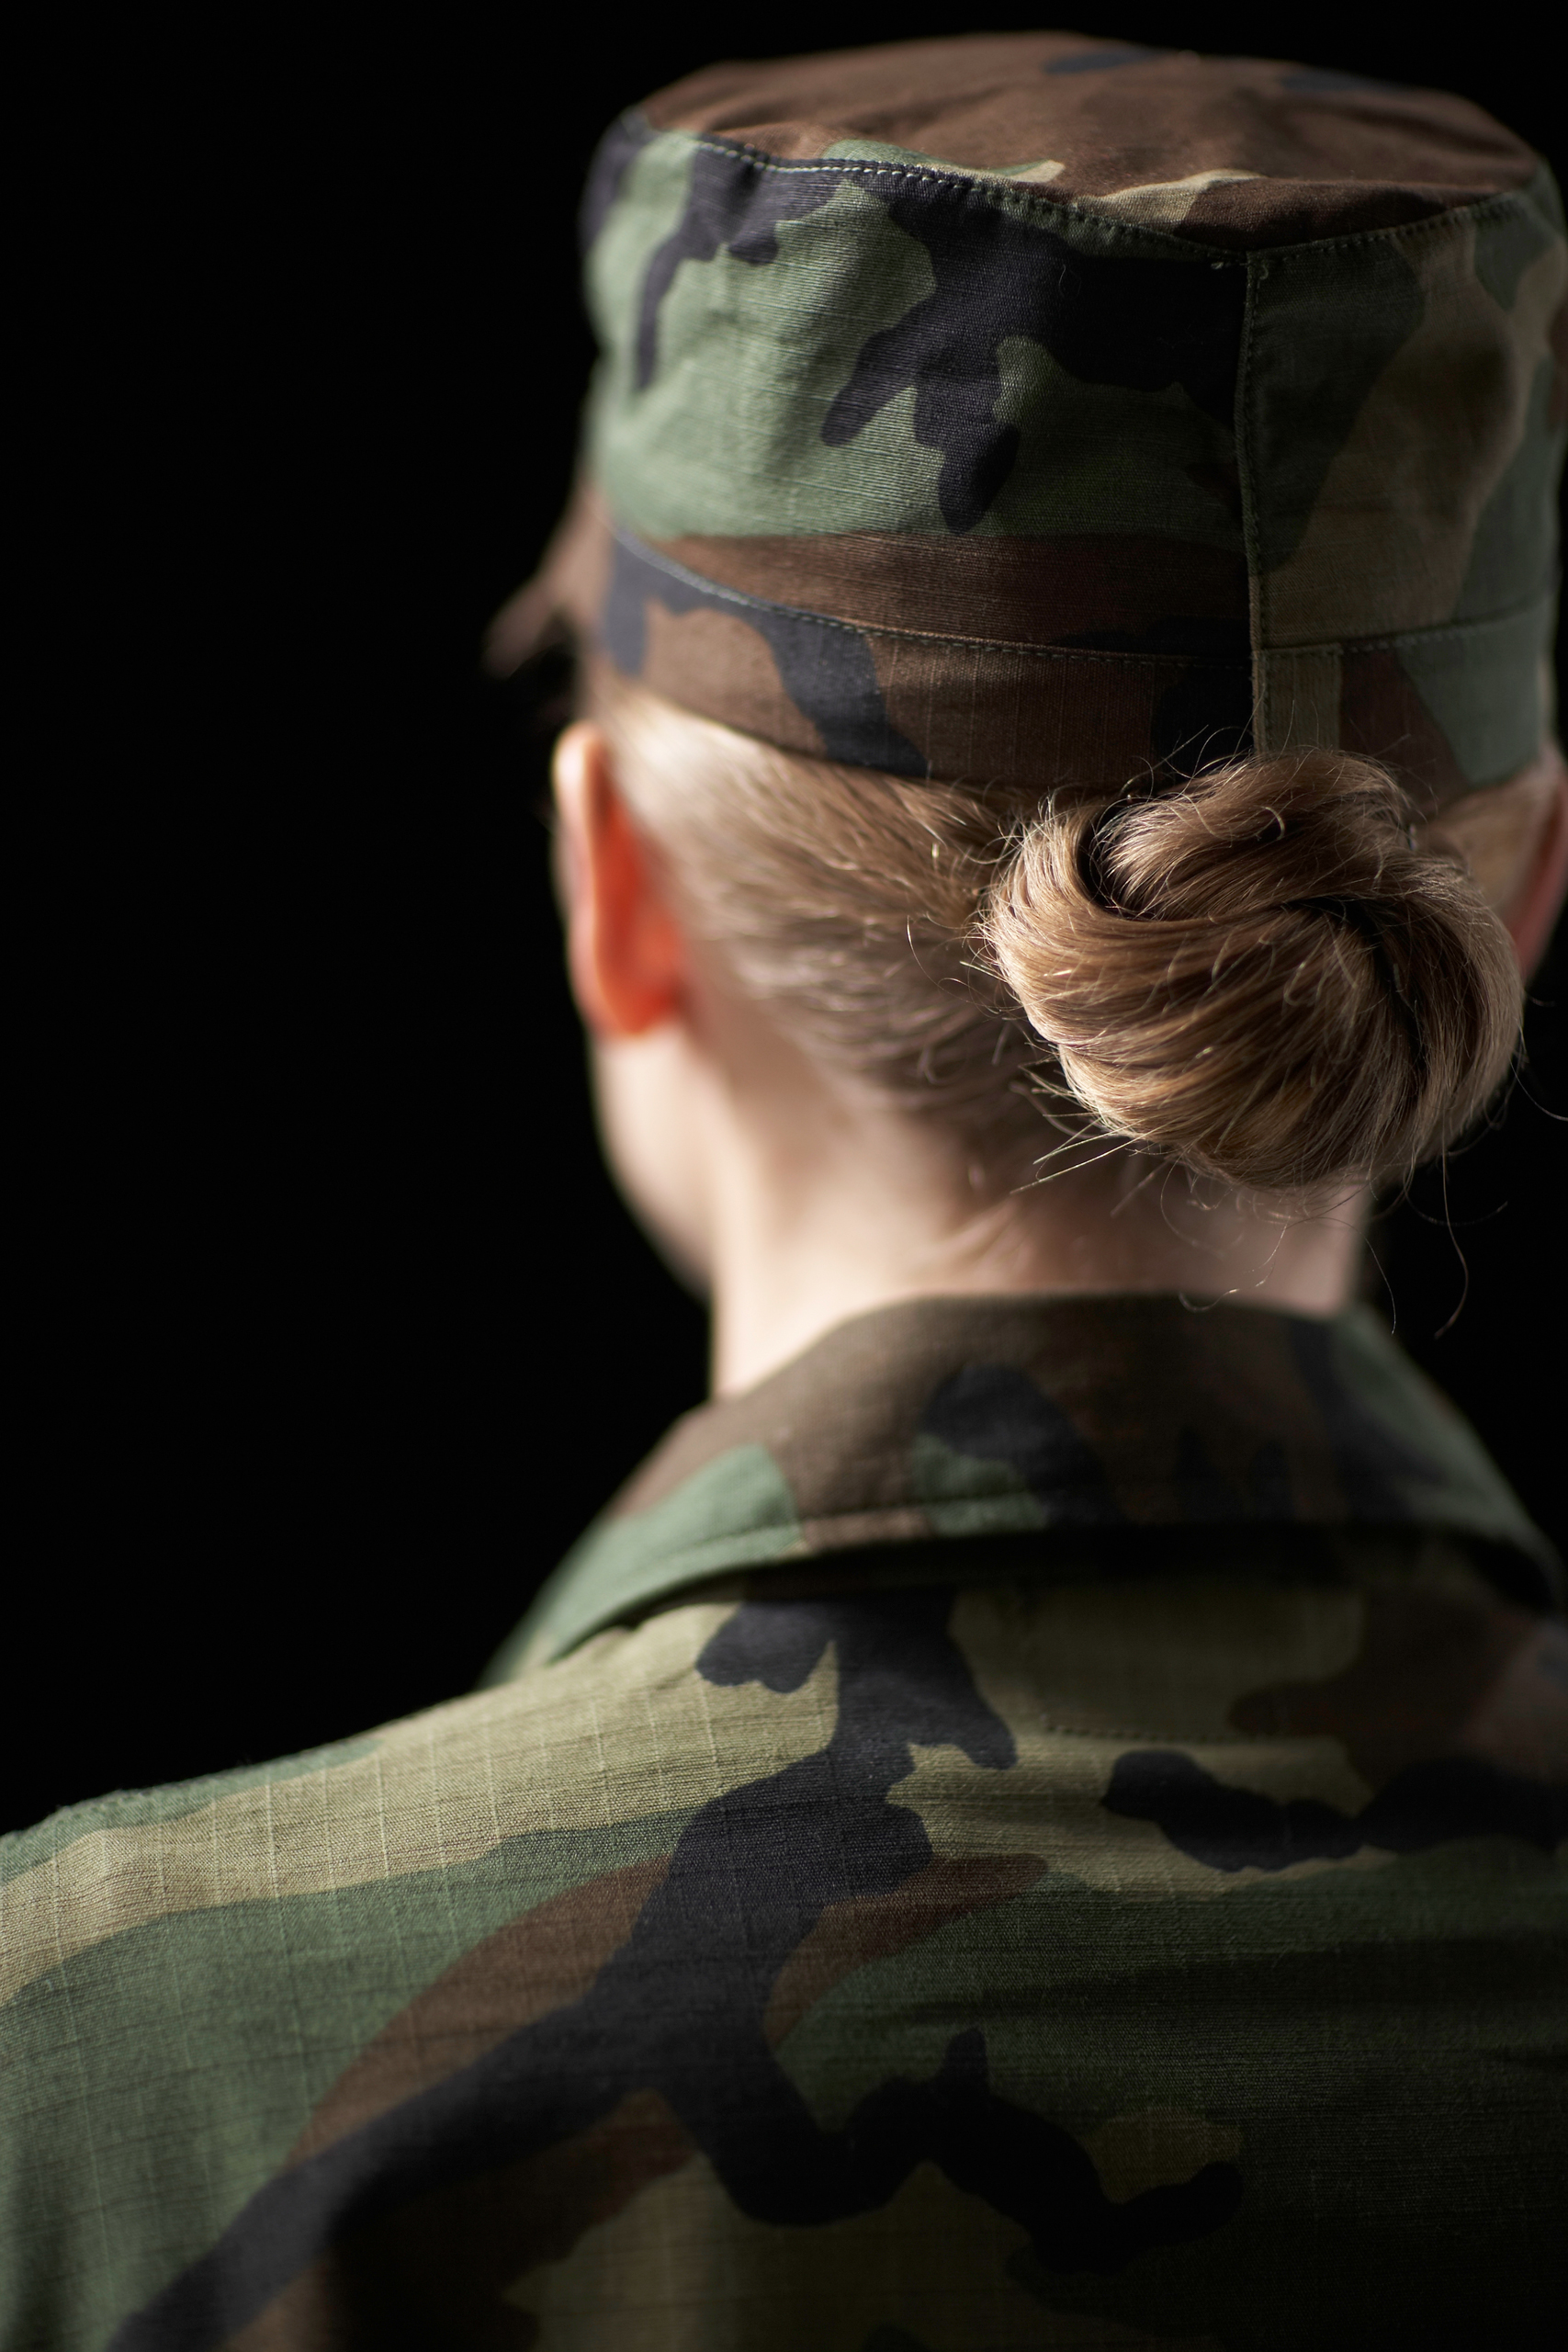 Female soldier wearing army uniform, rear view